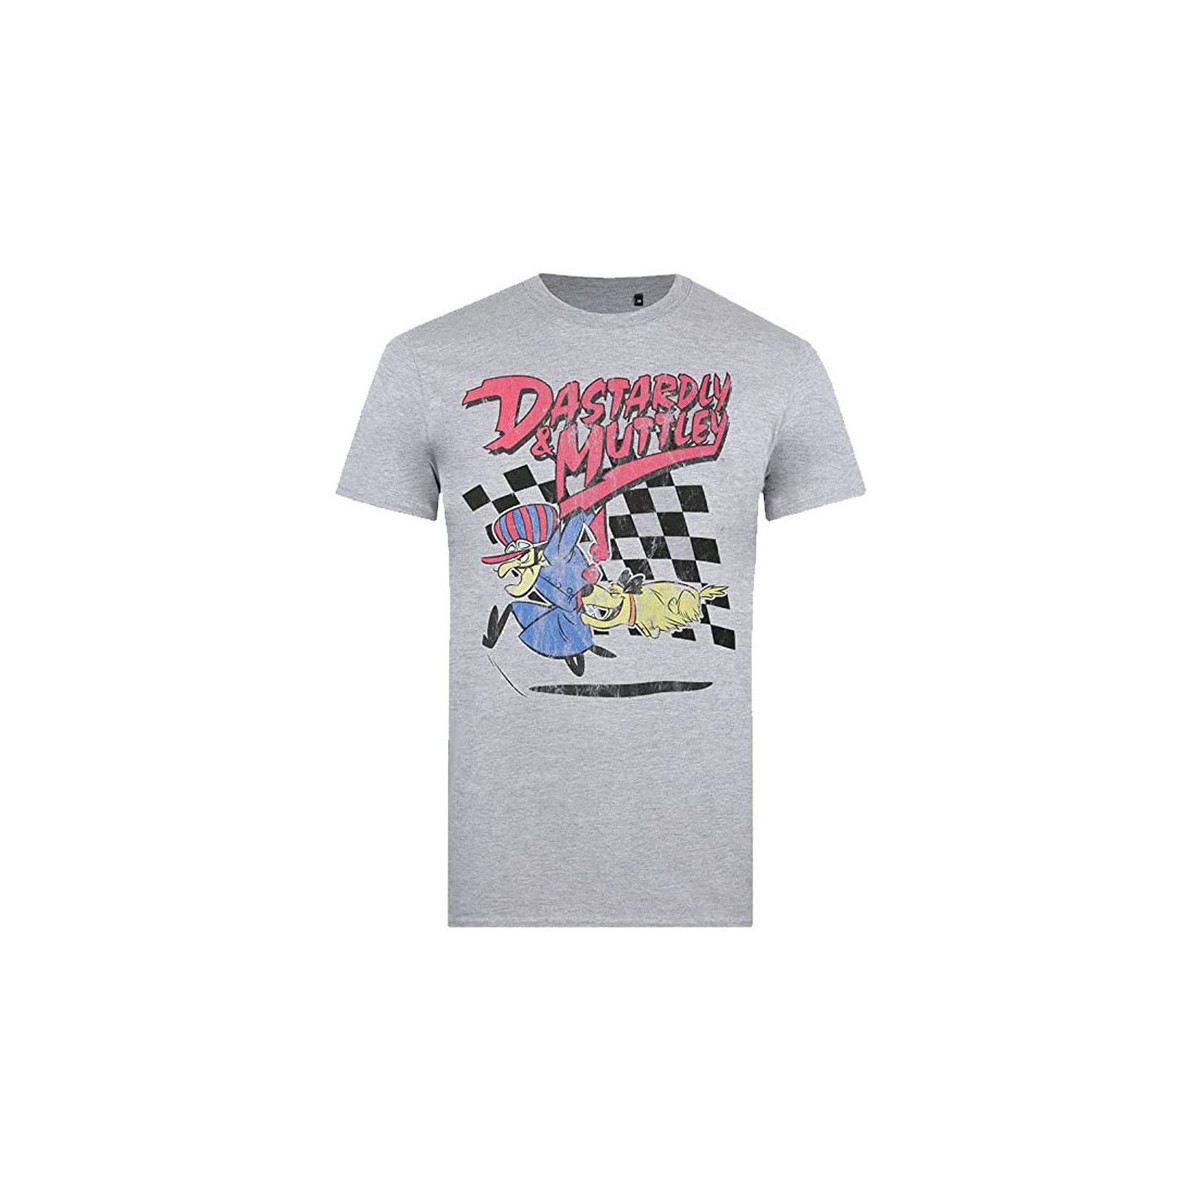 textil Hombre Camisetas manga larga Wacky Races Dastardly & Muttley Gris